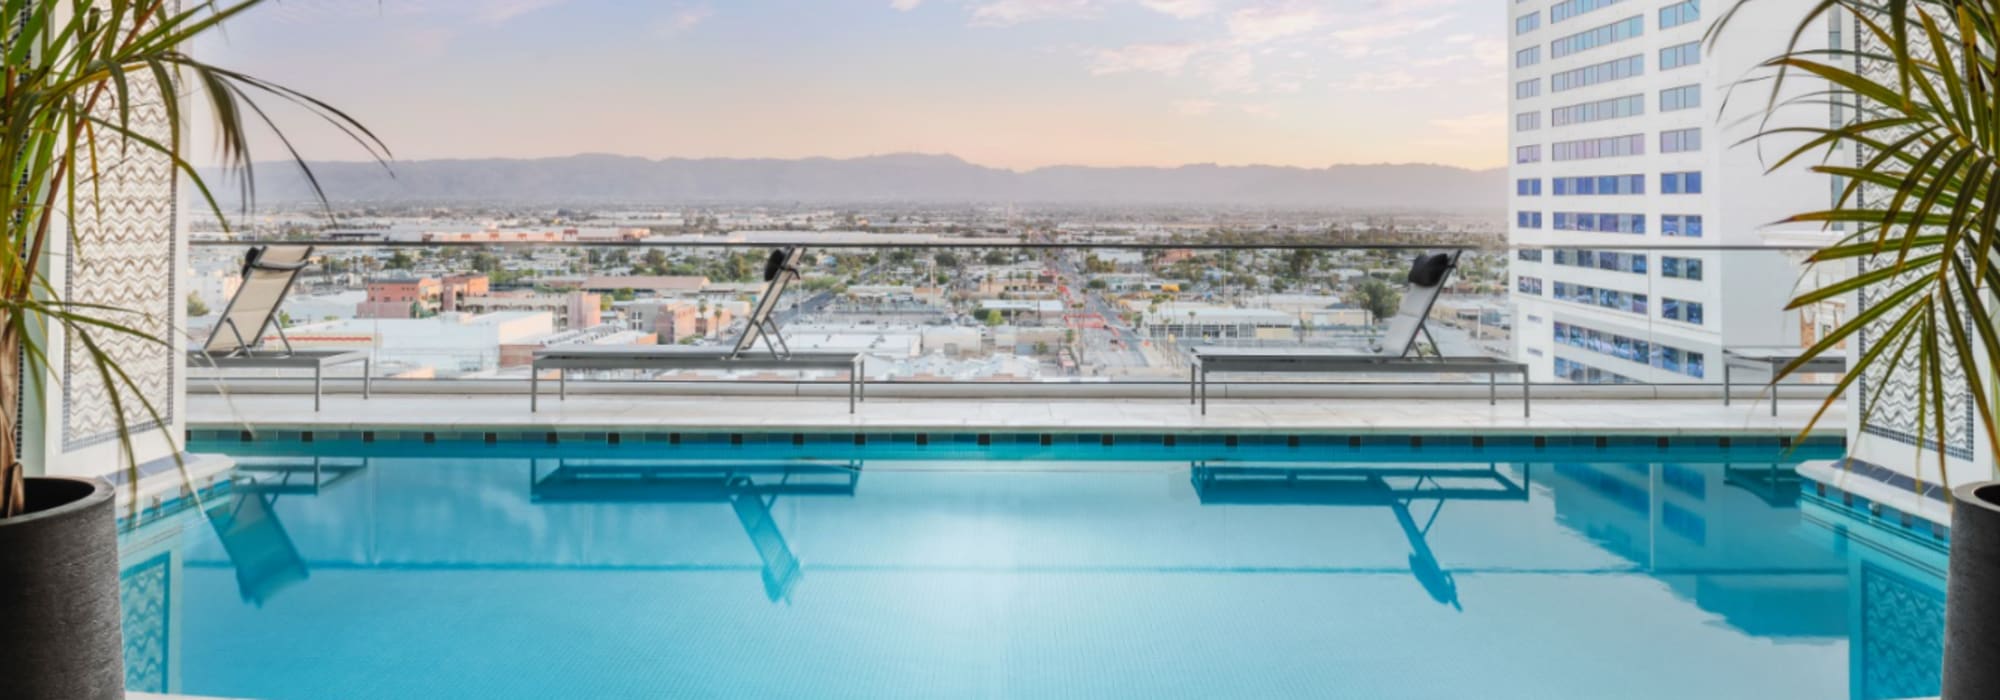 Luxury Swimming Pool at CityScape Residences in Phoenix, Arizona